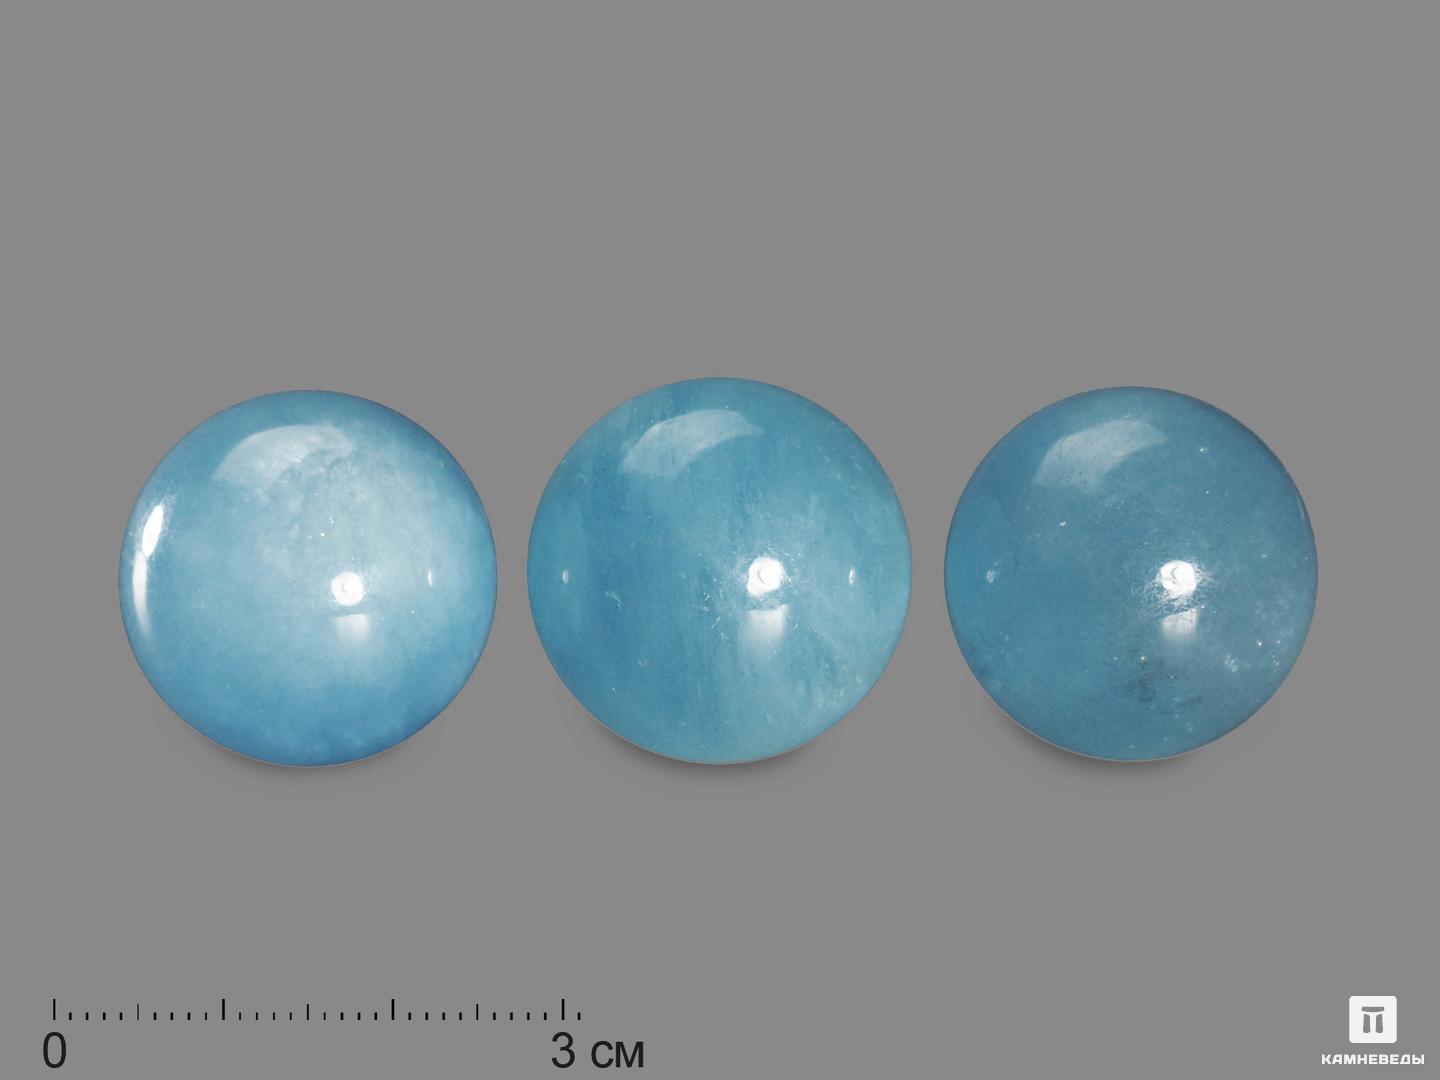 Шар из аквамарина (голубого берилла), 23 мм, 18818, фото 1